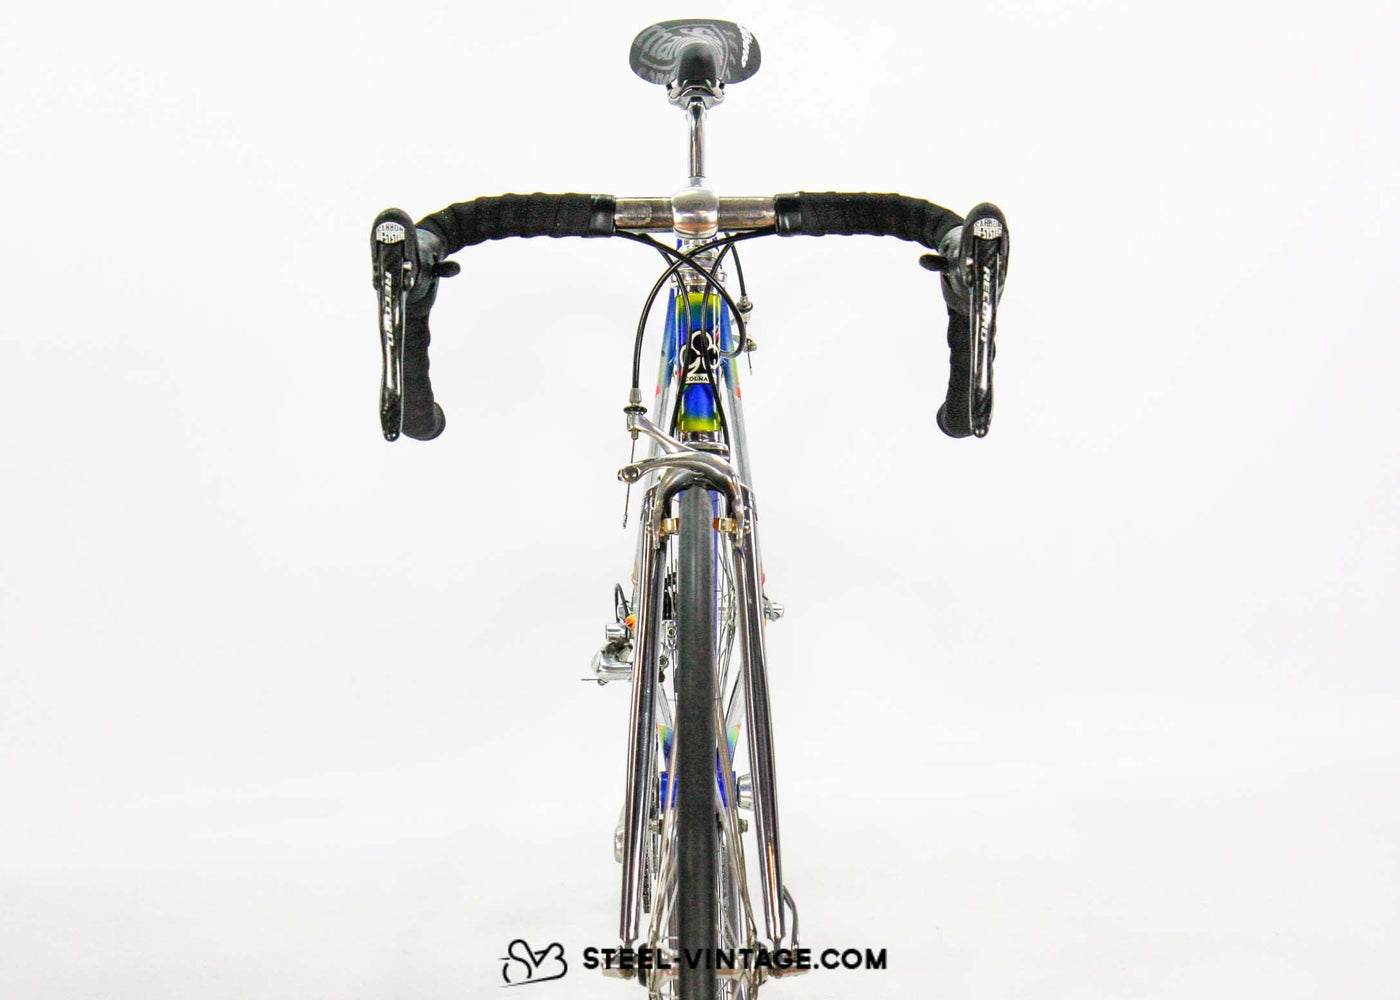 Colnago Master Olympic Road Bike Classic 1990s - Steel Vintage Bikes